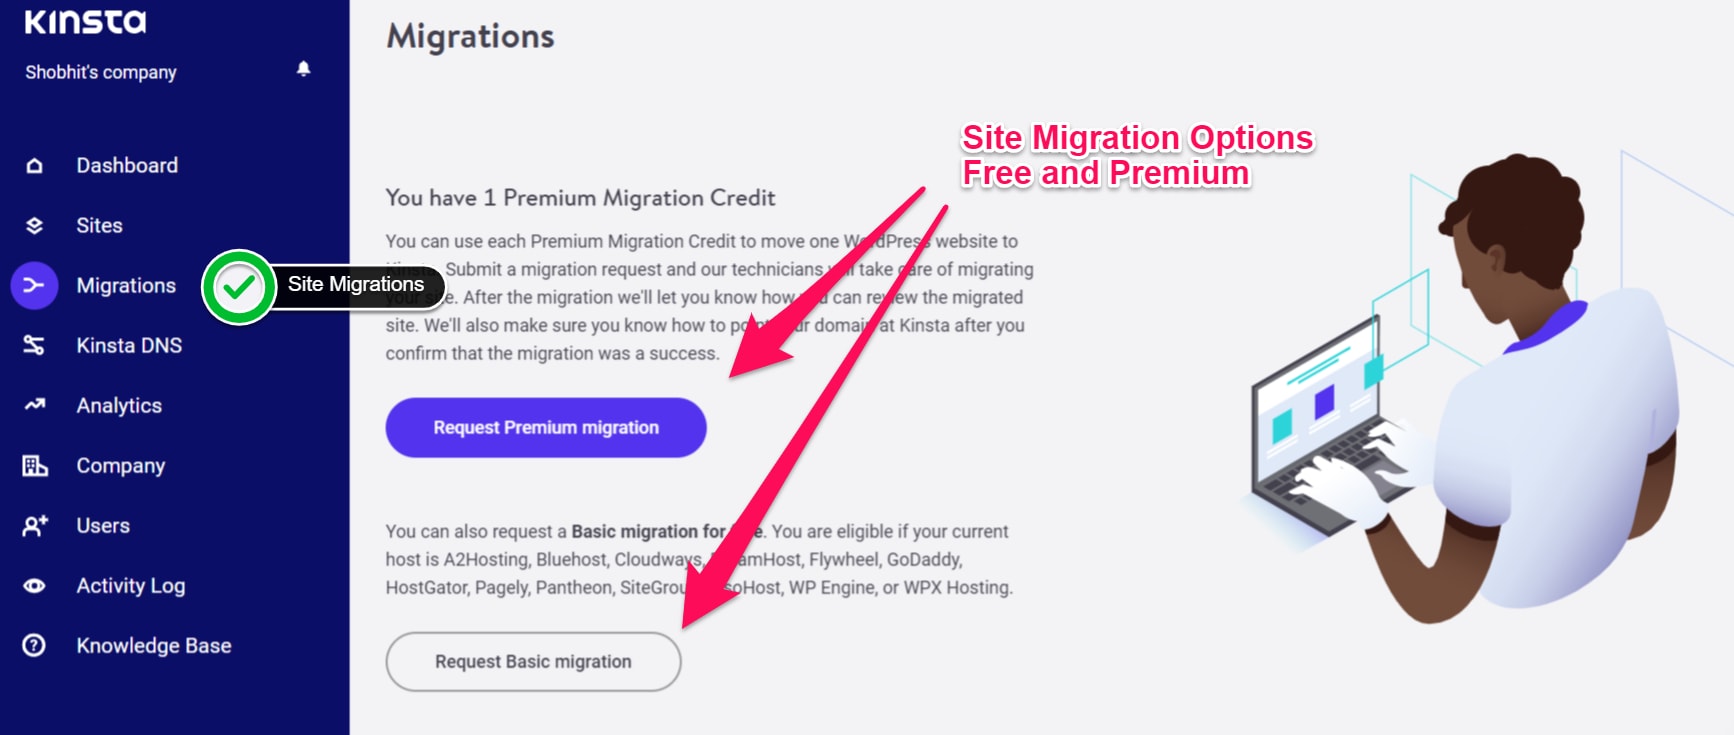 Kinsta Managed WordPress Hosting Site Migrations